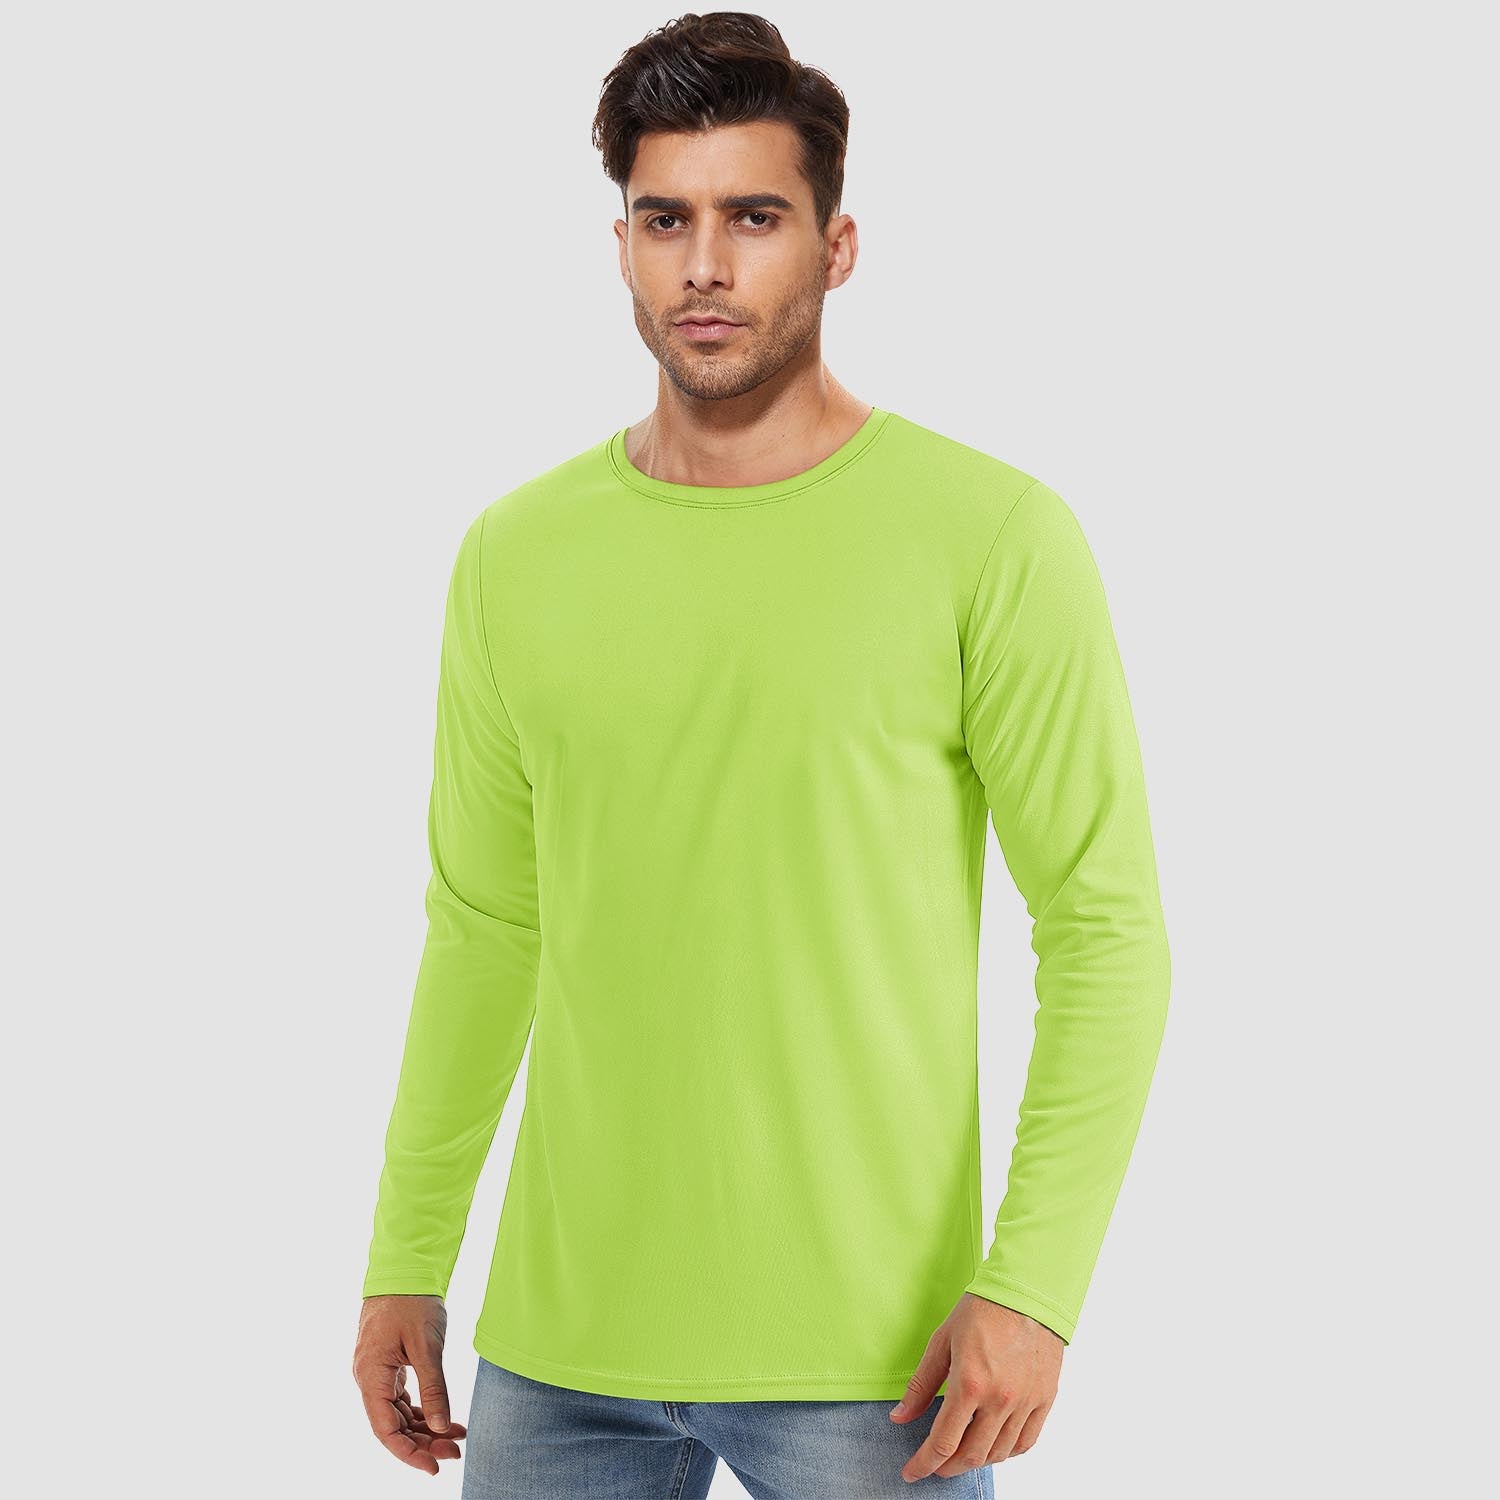 Men's UPF 80+ Long Sleeve Shirts UV Sun Protection Shirt Running